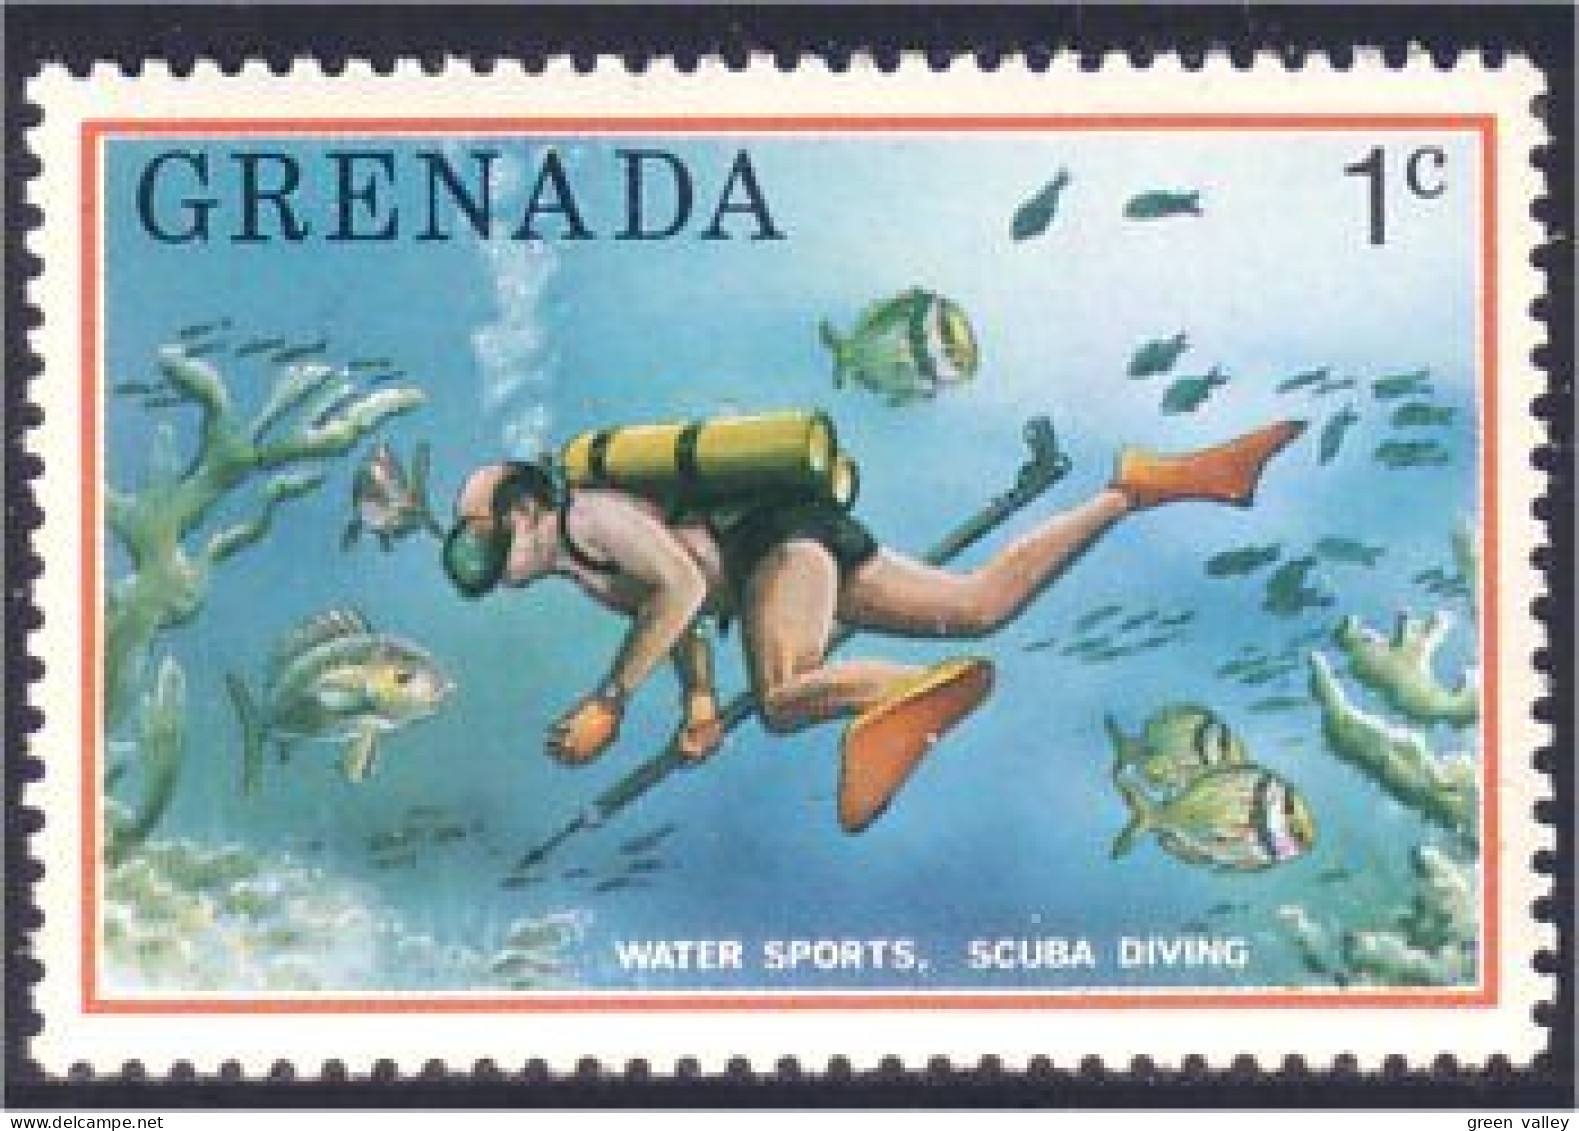 460 Grenada Scuba Diving Diver Plongee Peche Fishing Snorkelling MNH ** Neuf SC (GRE-133) - Plongée